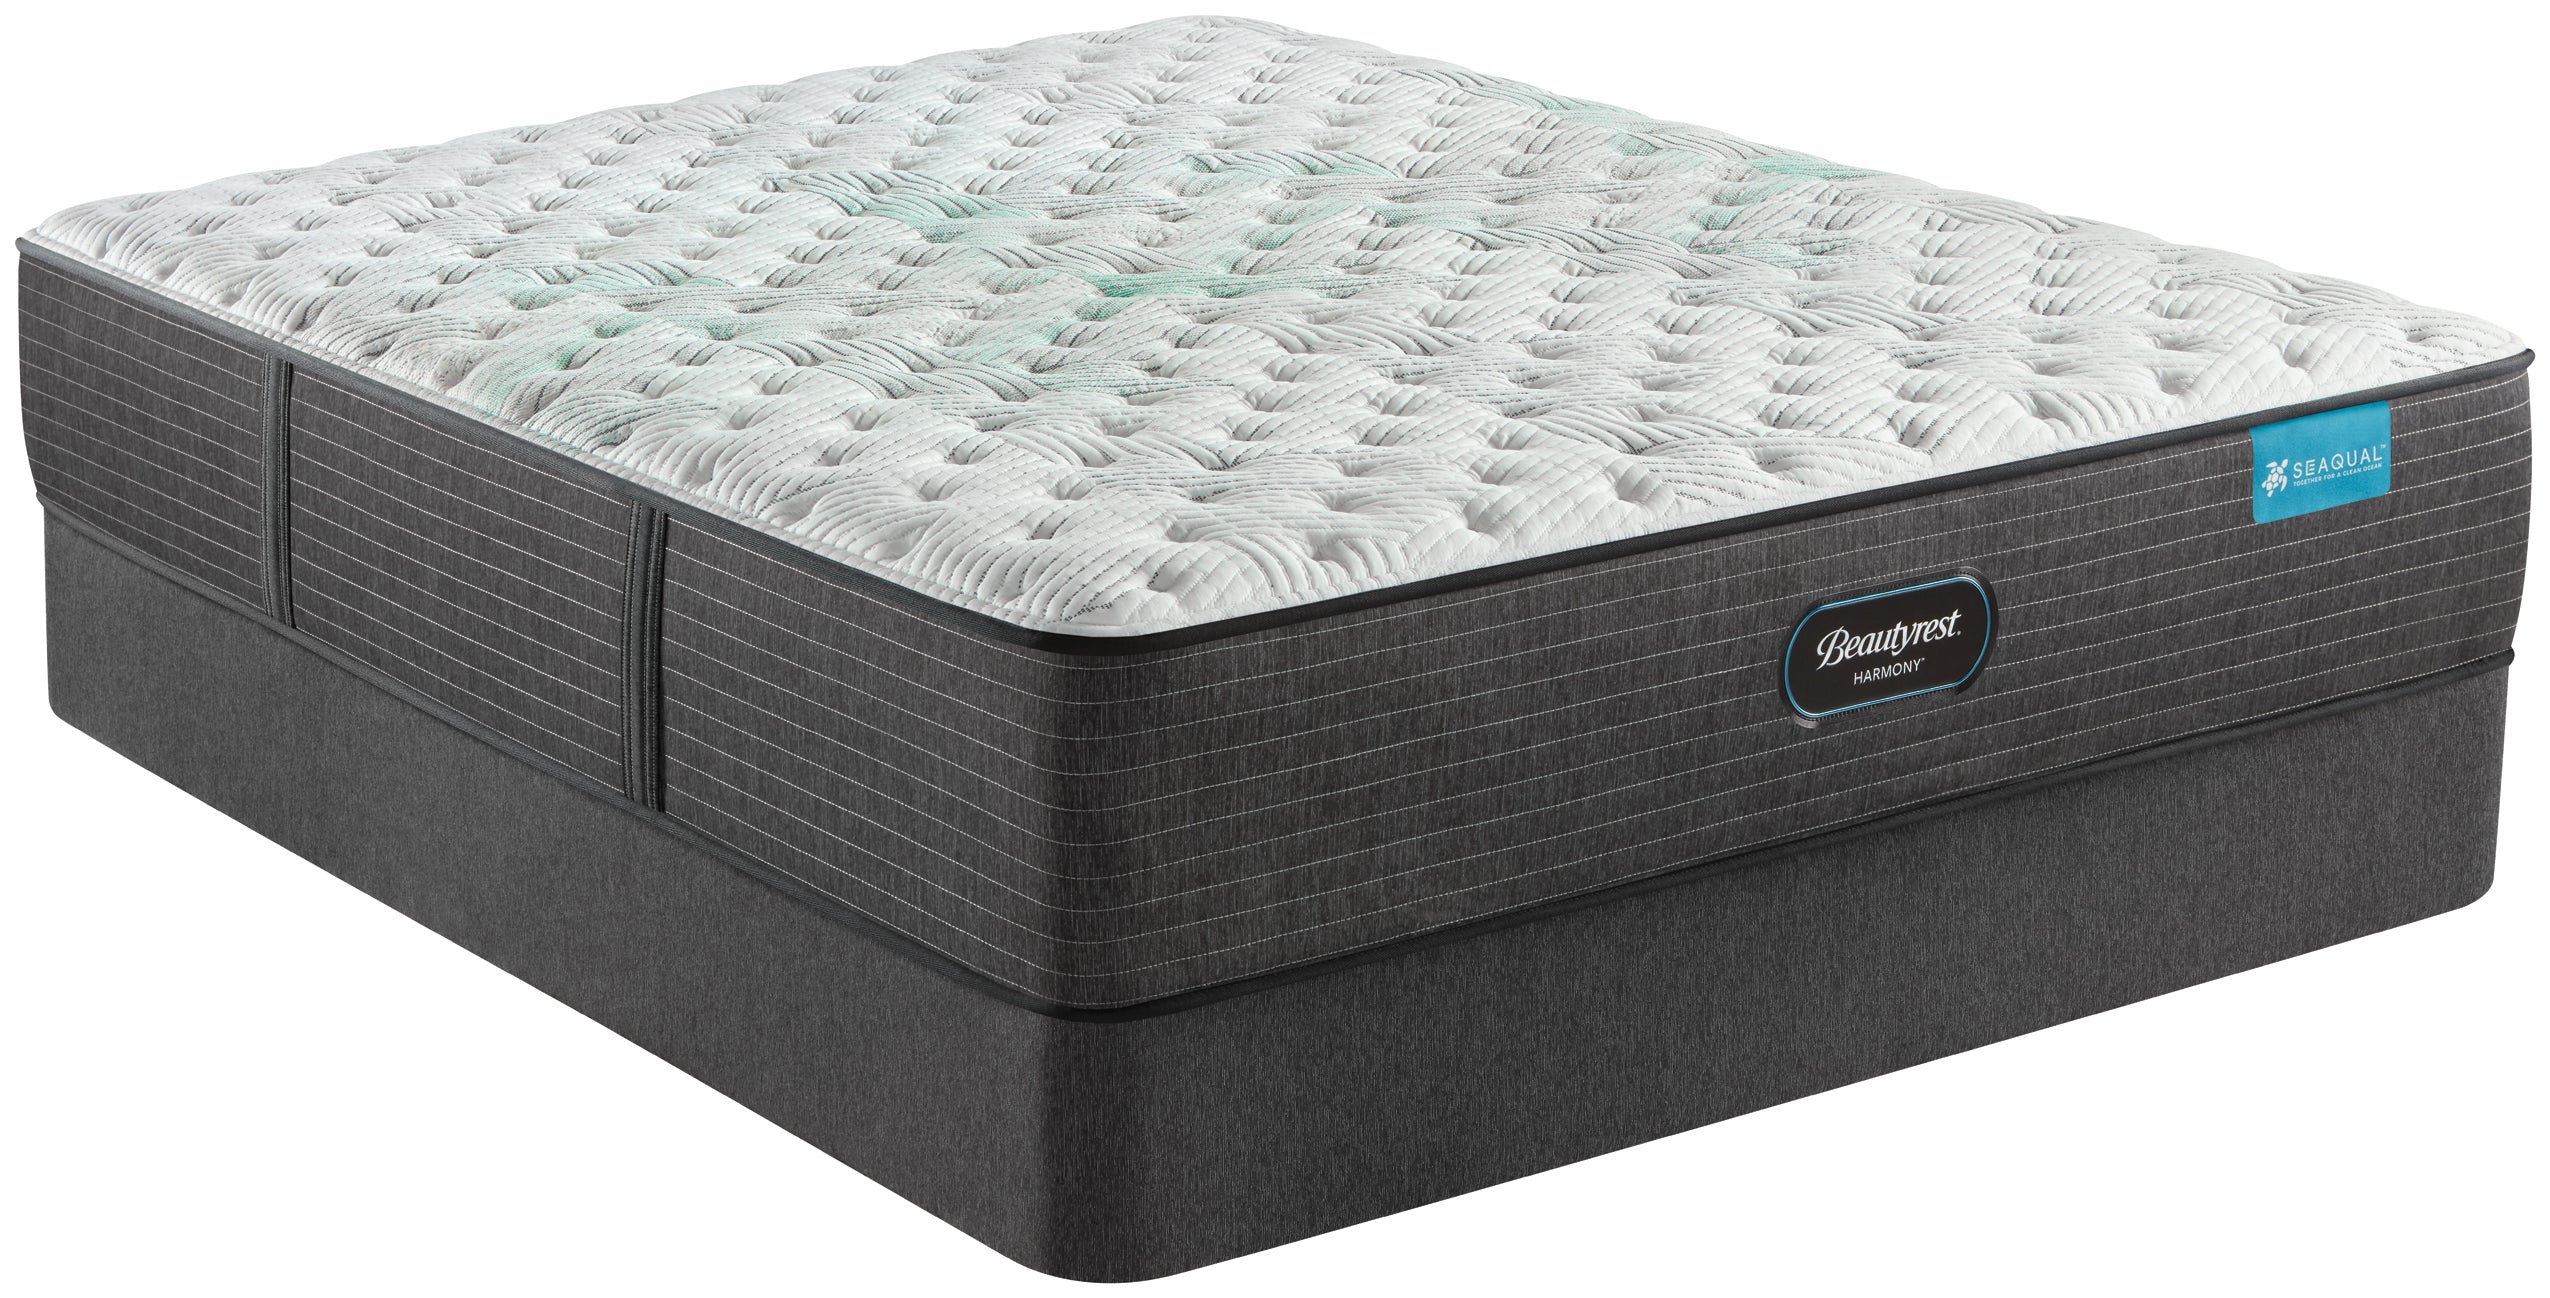 harmony cayman extra firm mattress